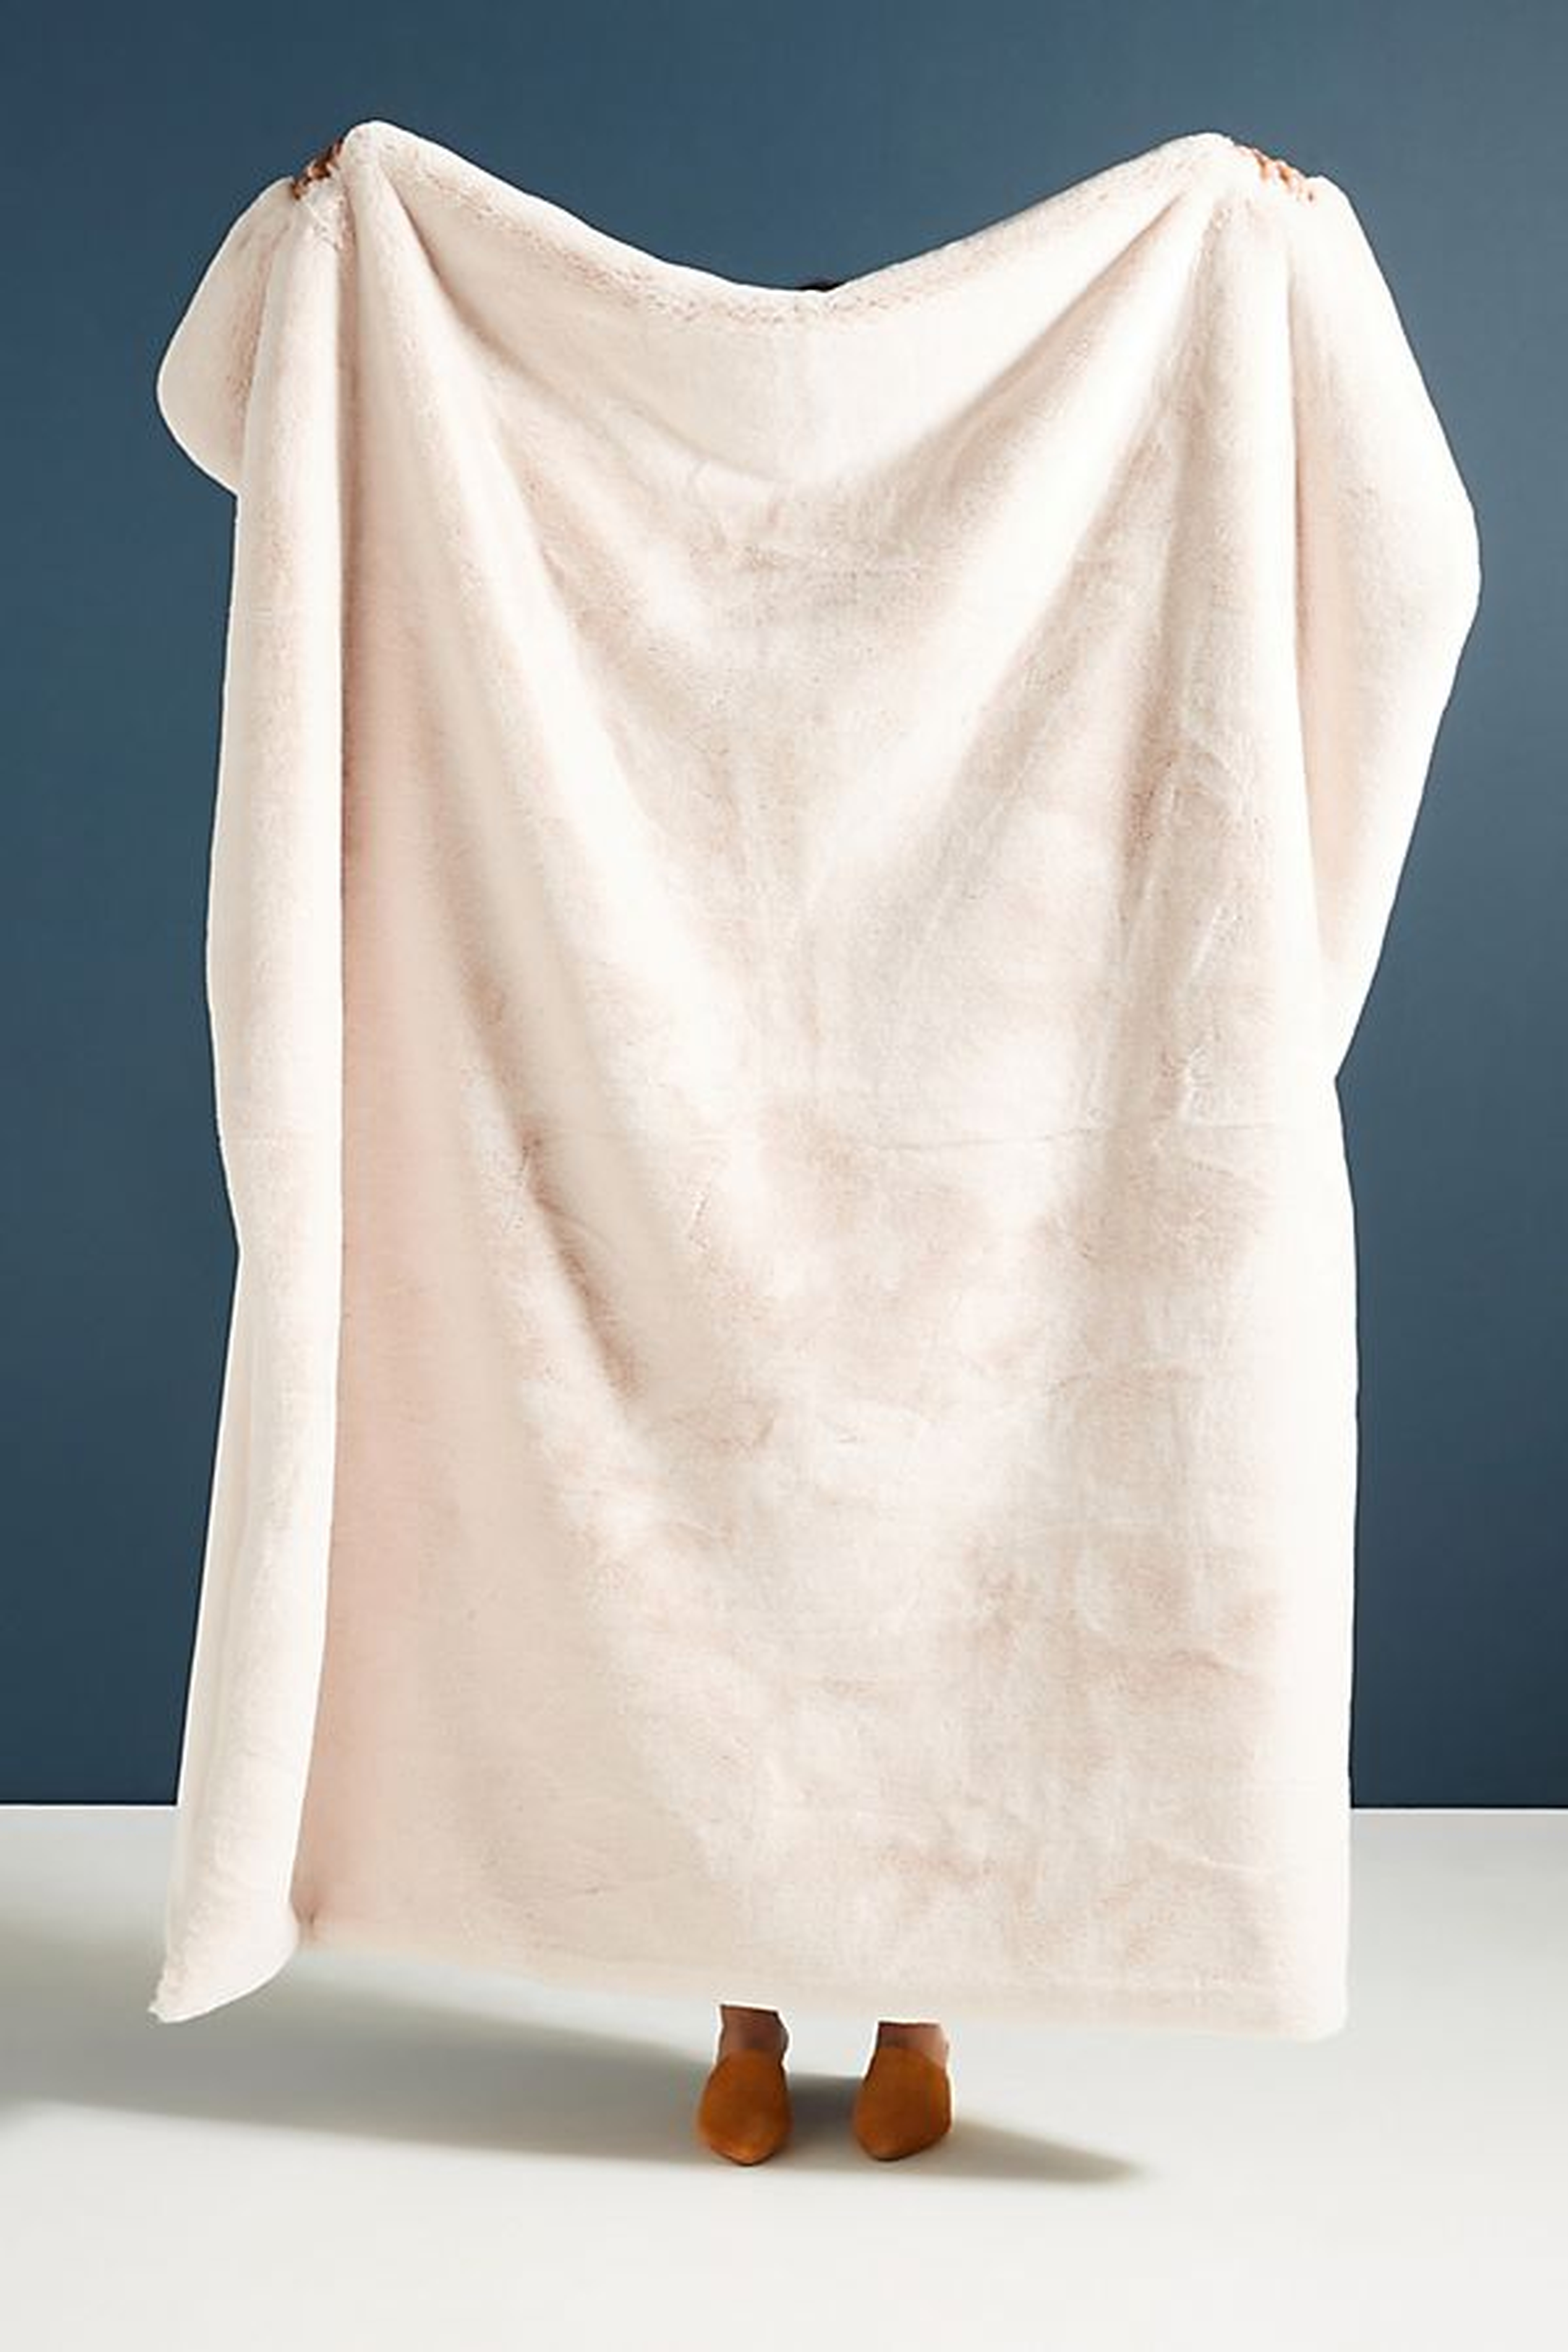 Sophie Faux Fur Throw Blanket in blush - Anthropologie